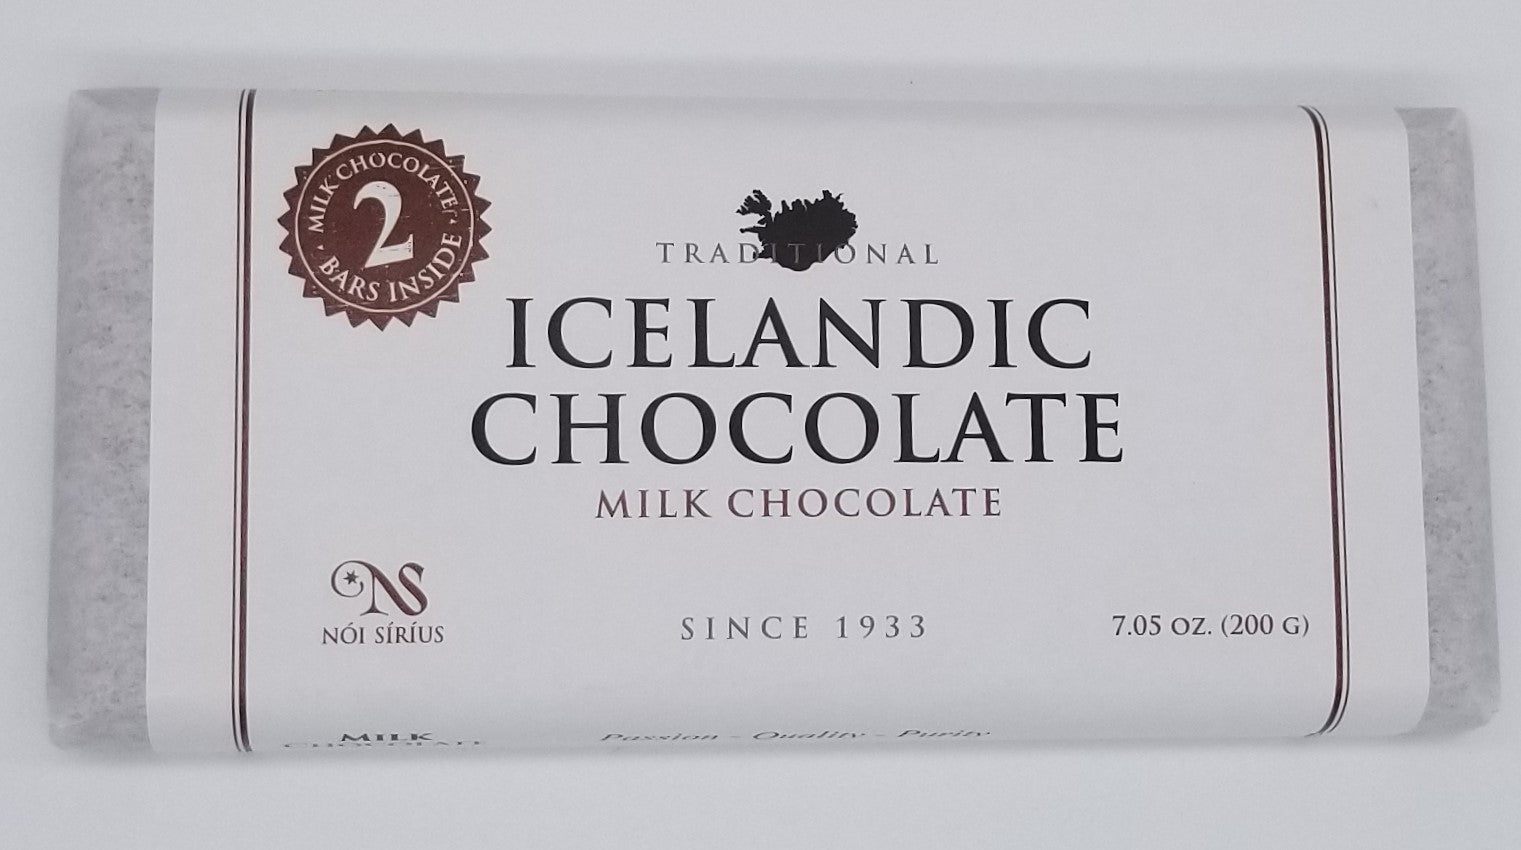 33% Milk Chocolate